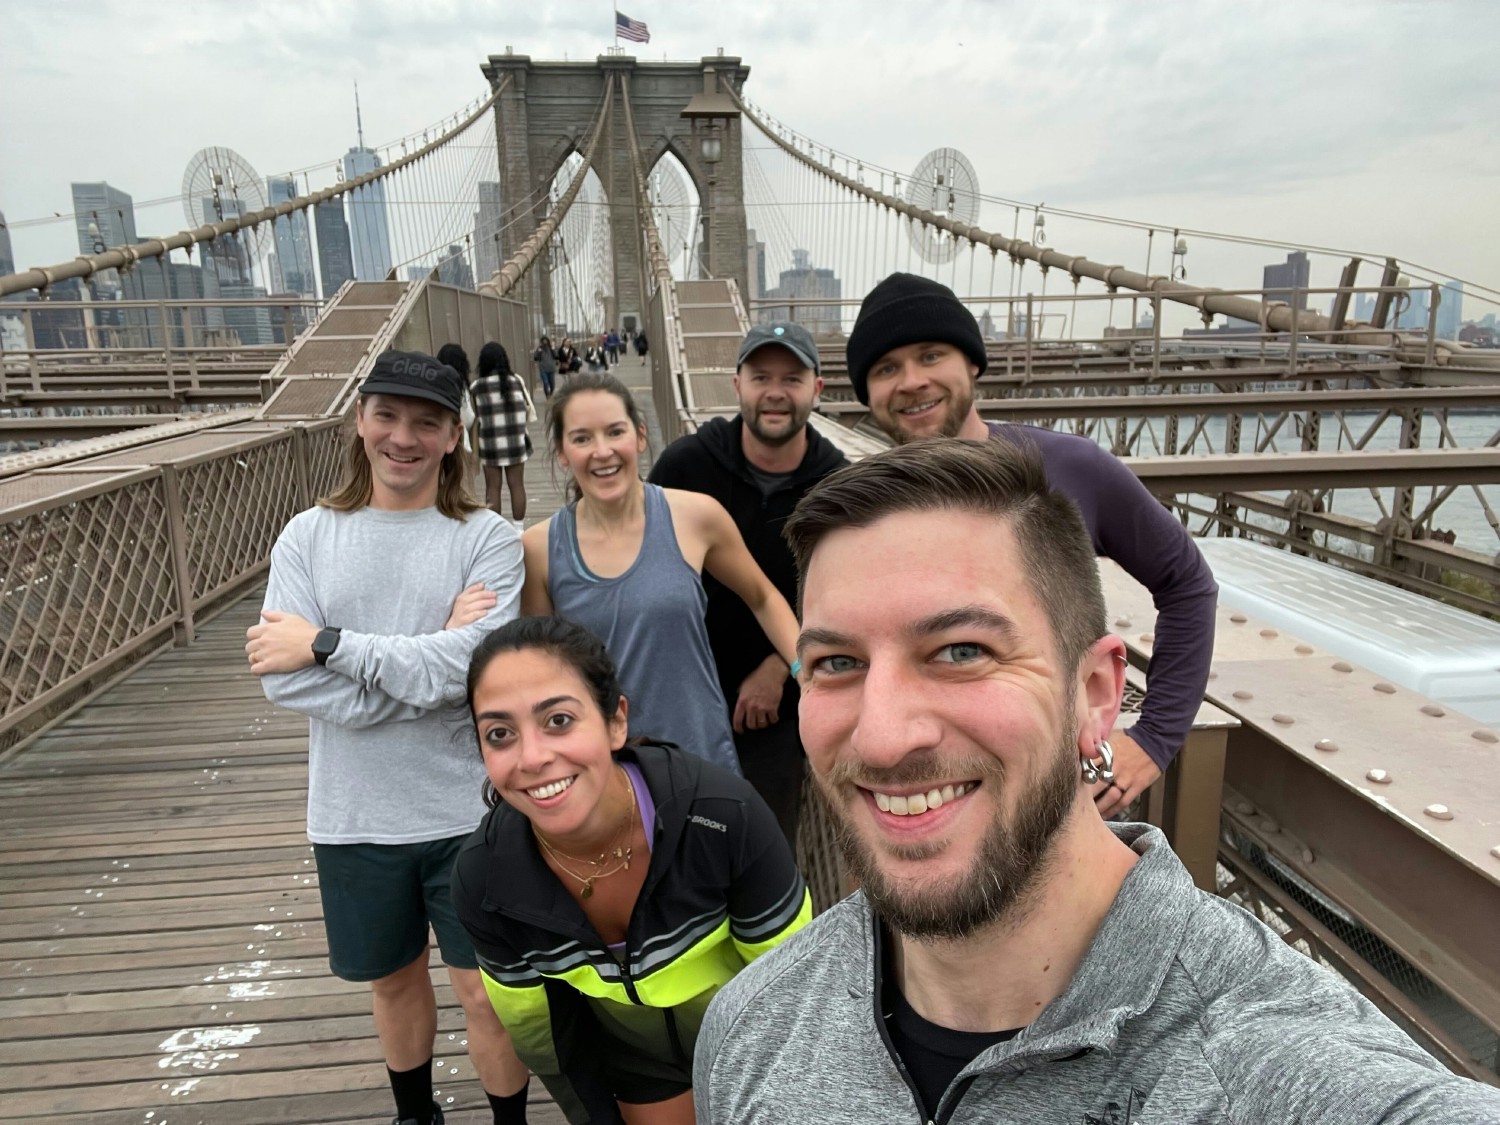 Thrivers jogging across the Brooklyn Bridge.